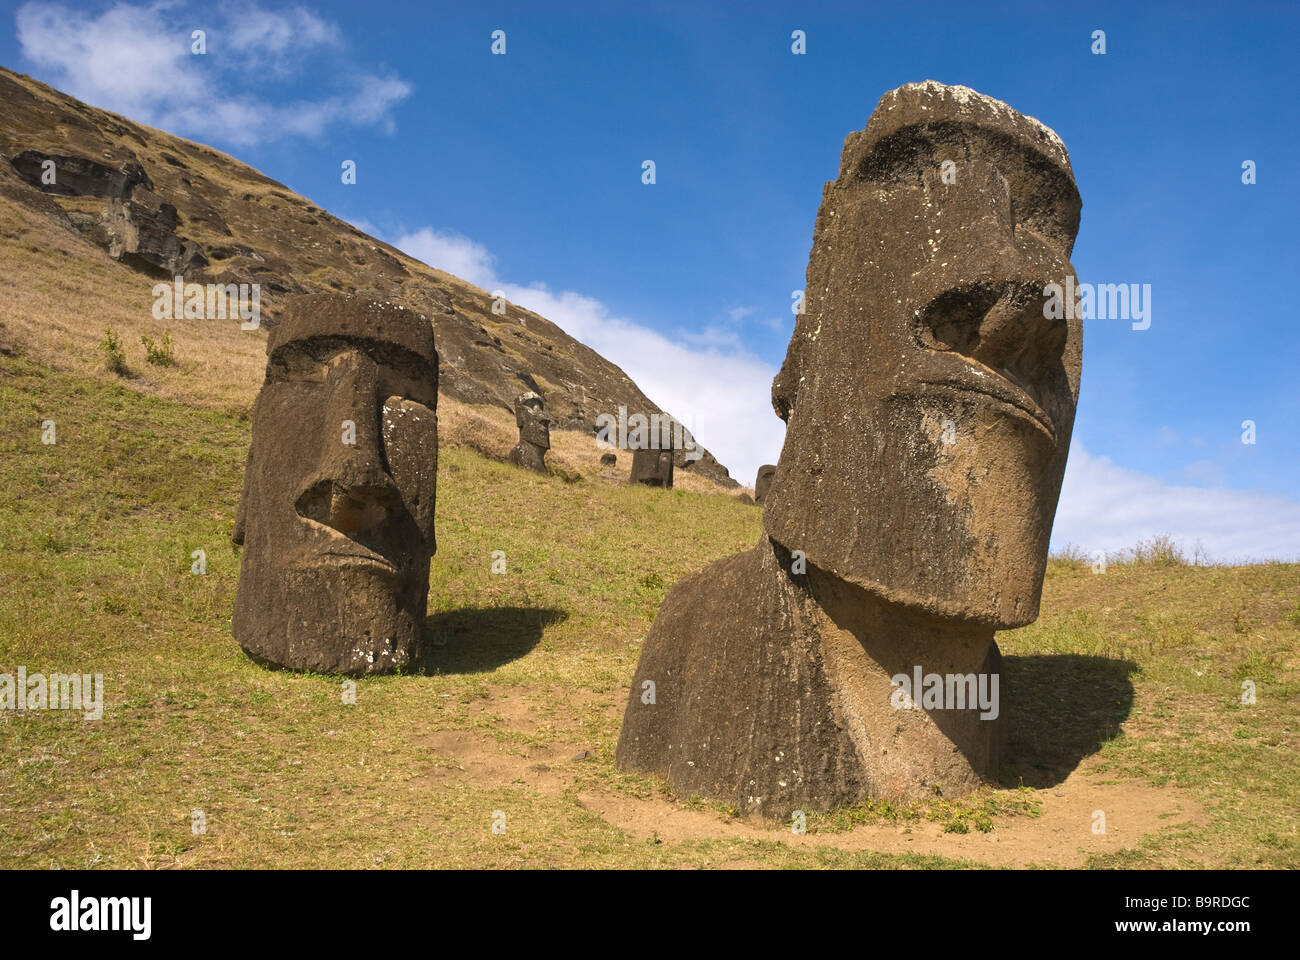 Elk198 5261 Cile Isola di Pasqua Rano Raraku moai statue Foto Stock